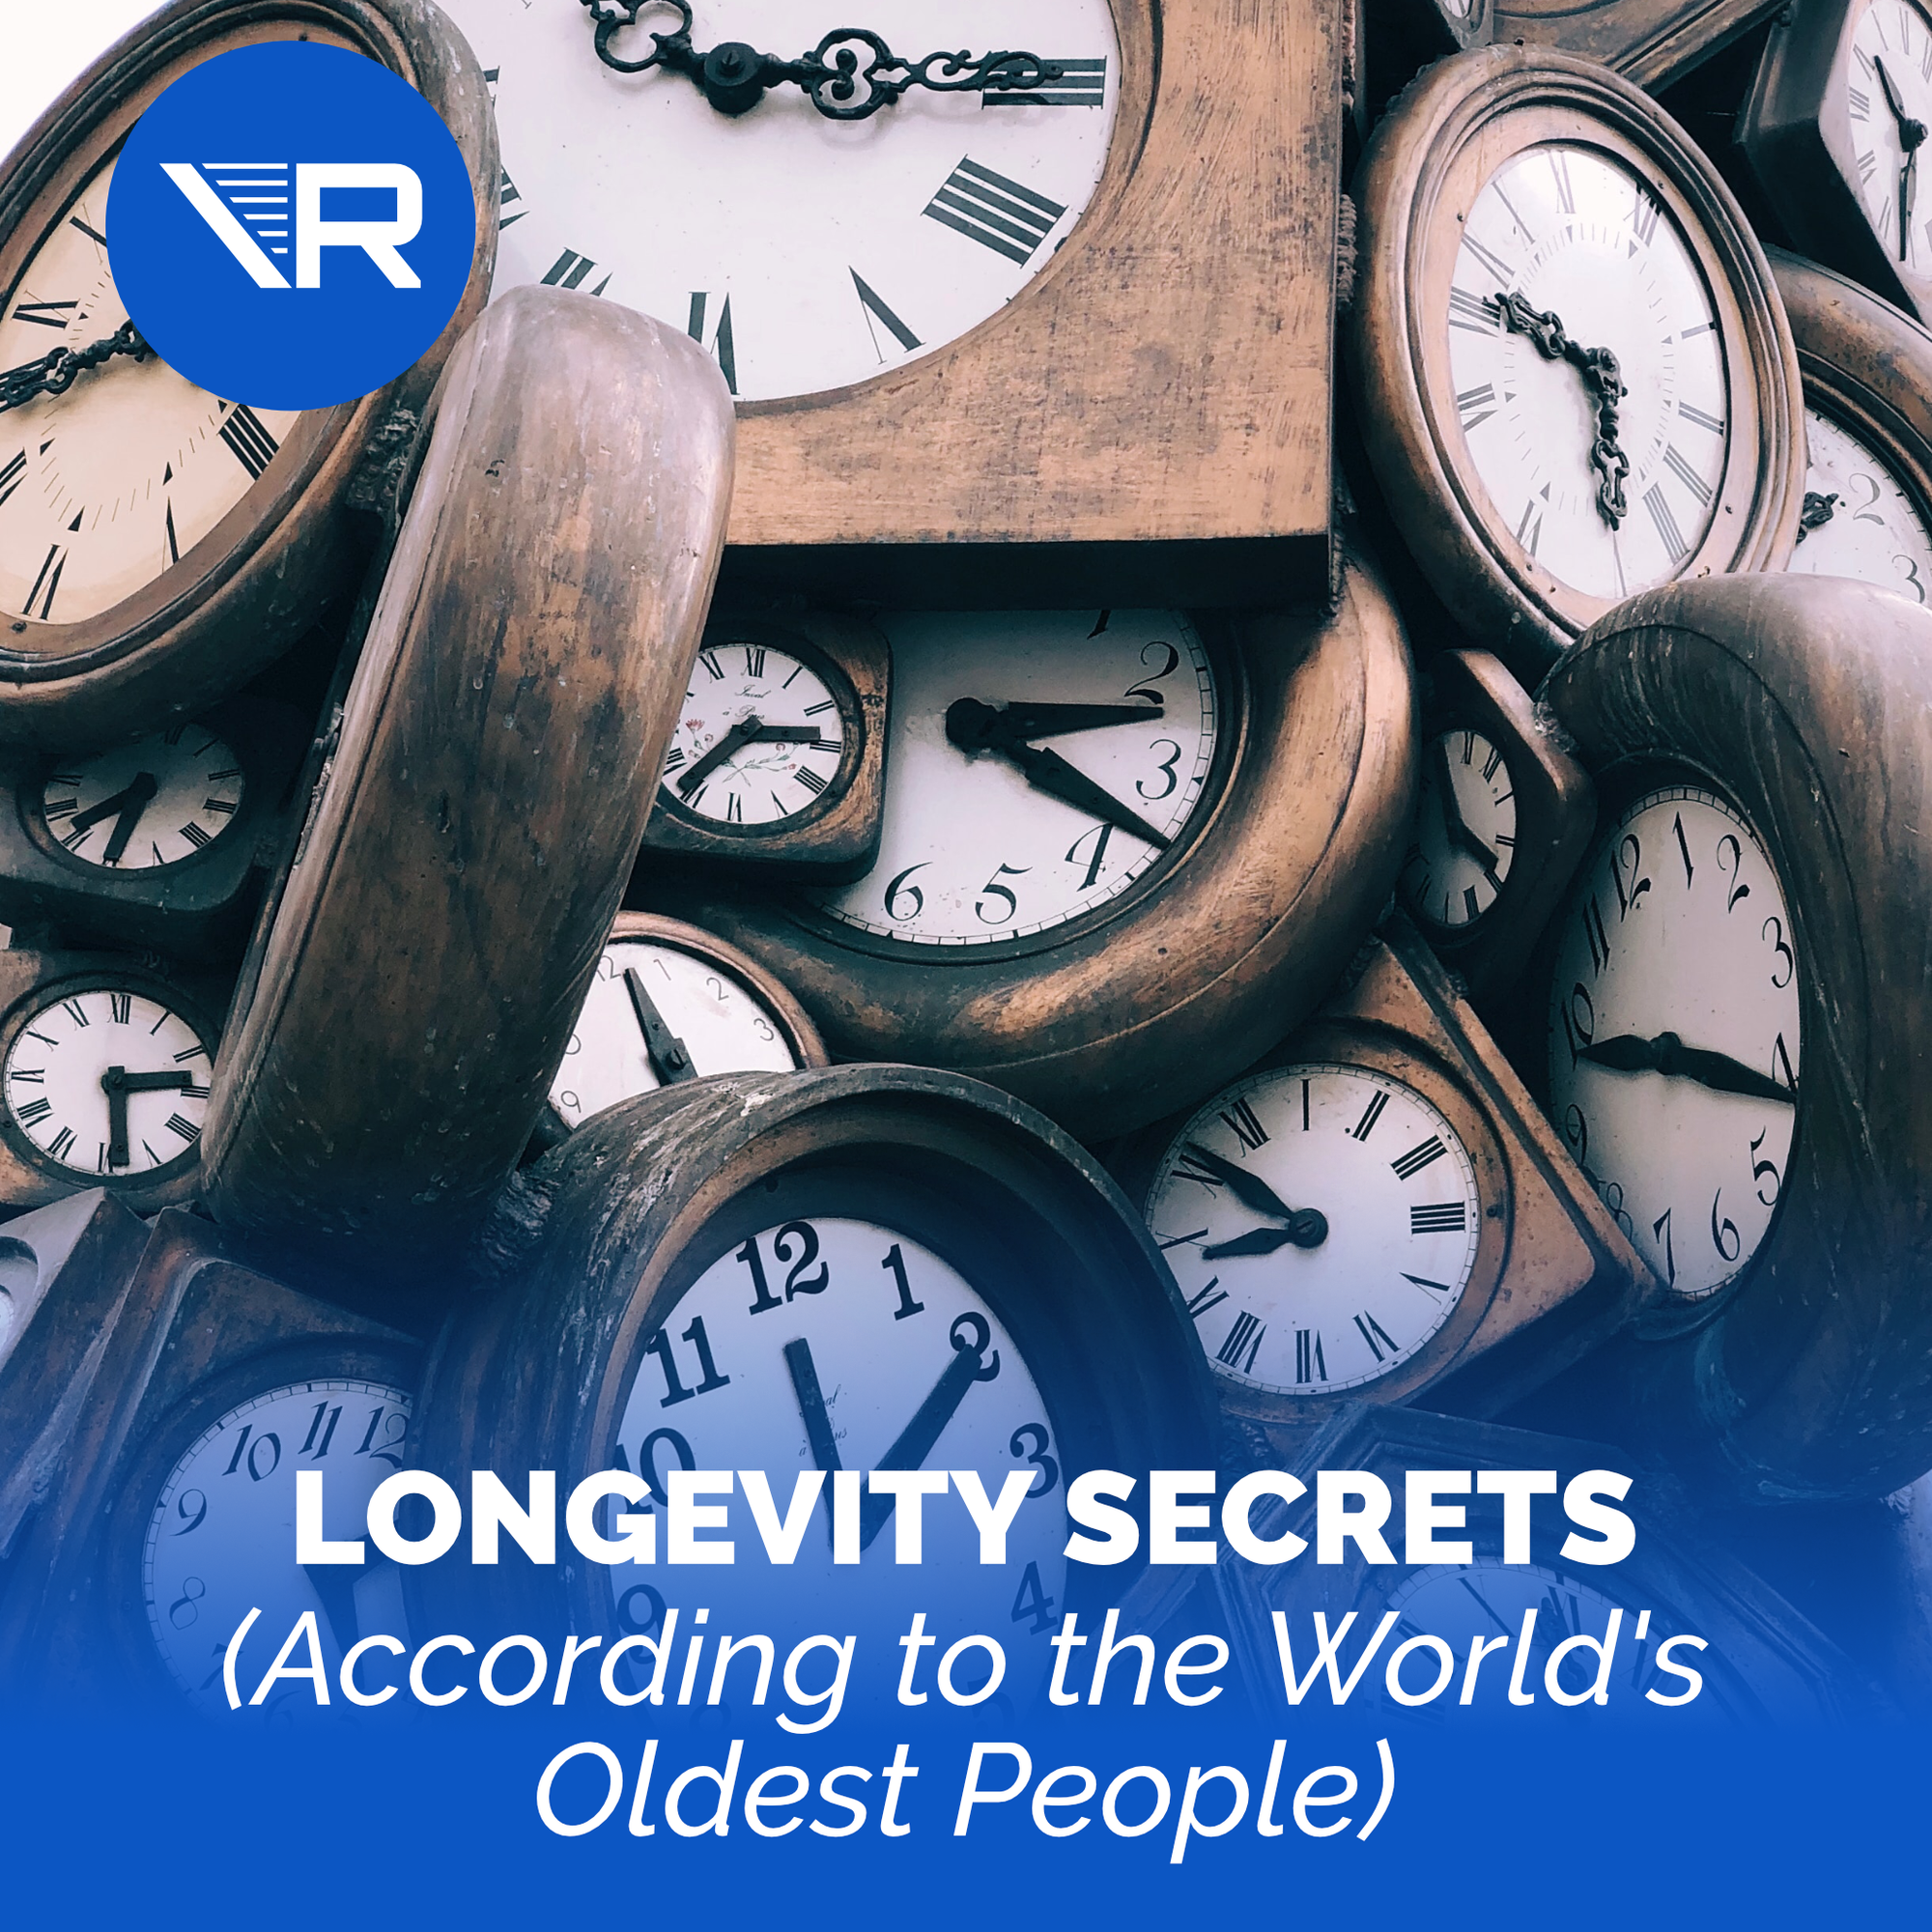 Longevity secrets